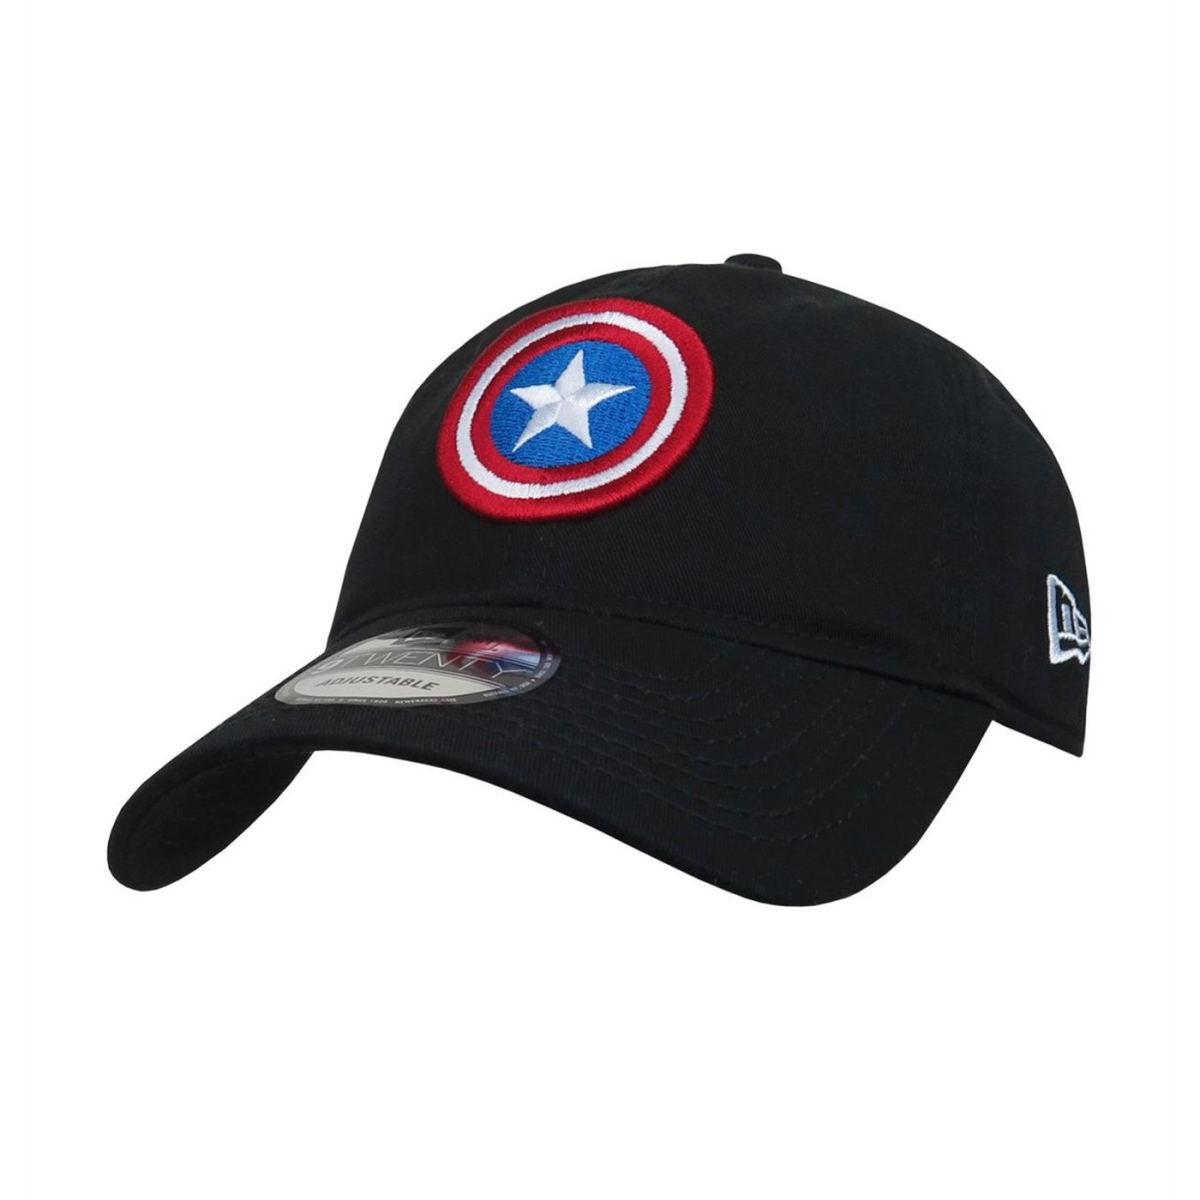 Picture of Captain America capcapblksld920 Captain America Shield Black 9 Twenty Adjustable Hat